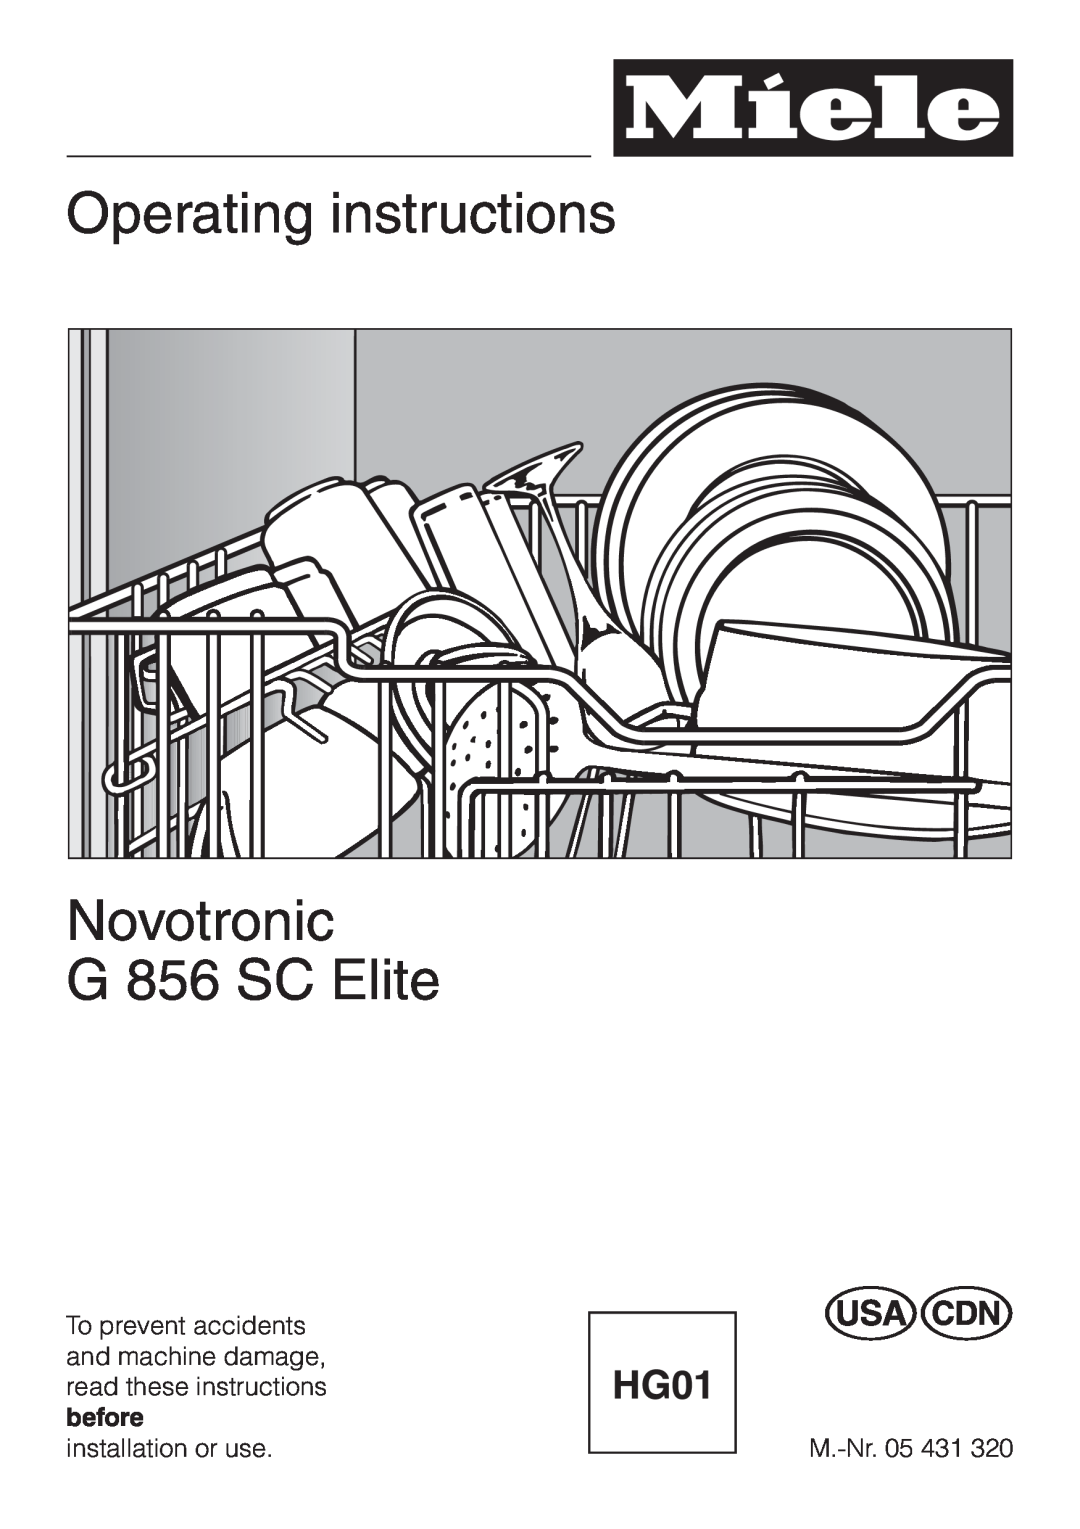 Miele G 856 SC ELITE manual Operating instructions, Novotronic G 856 SC Elite 